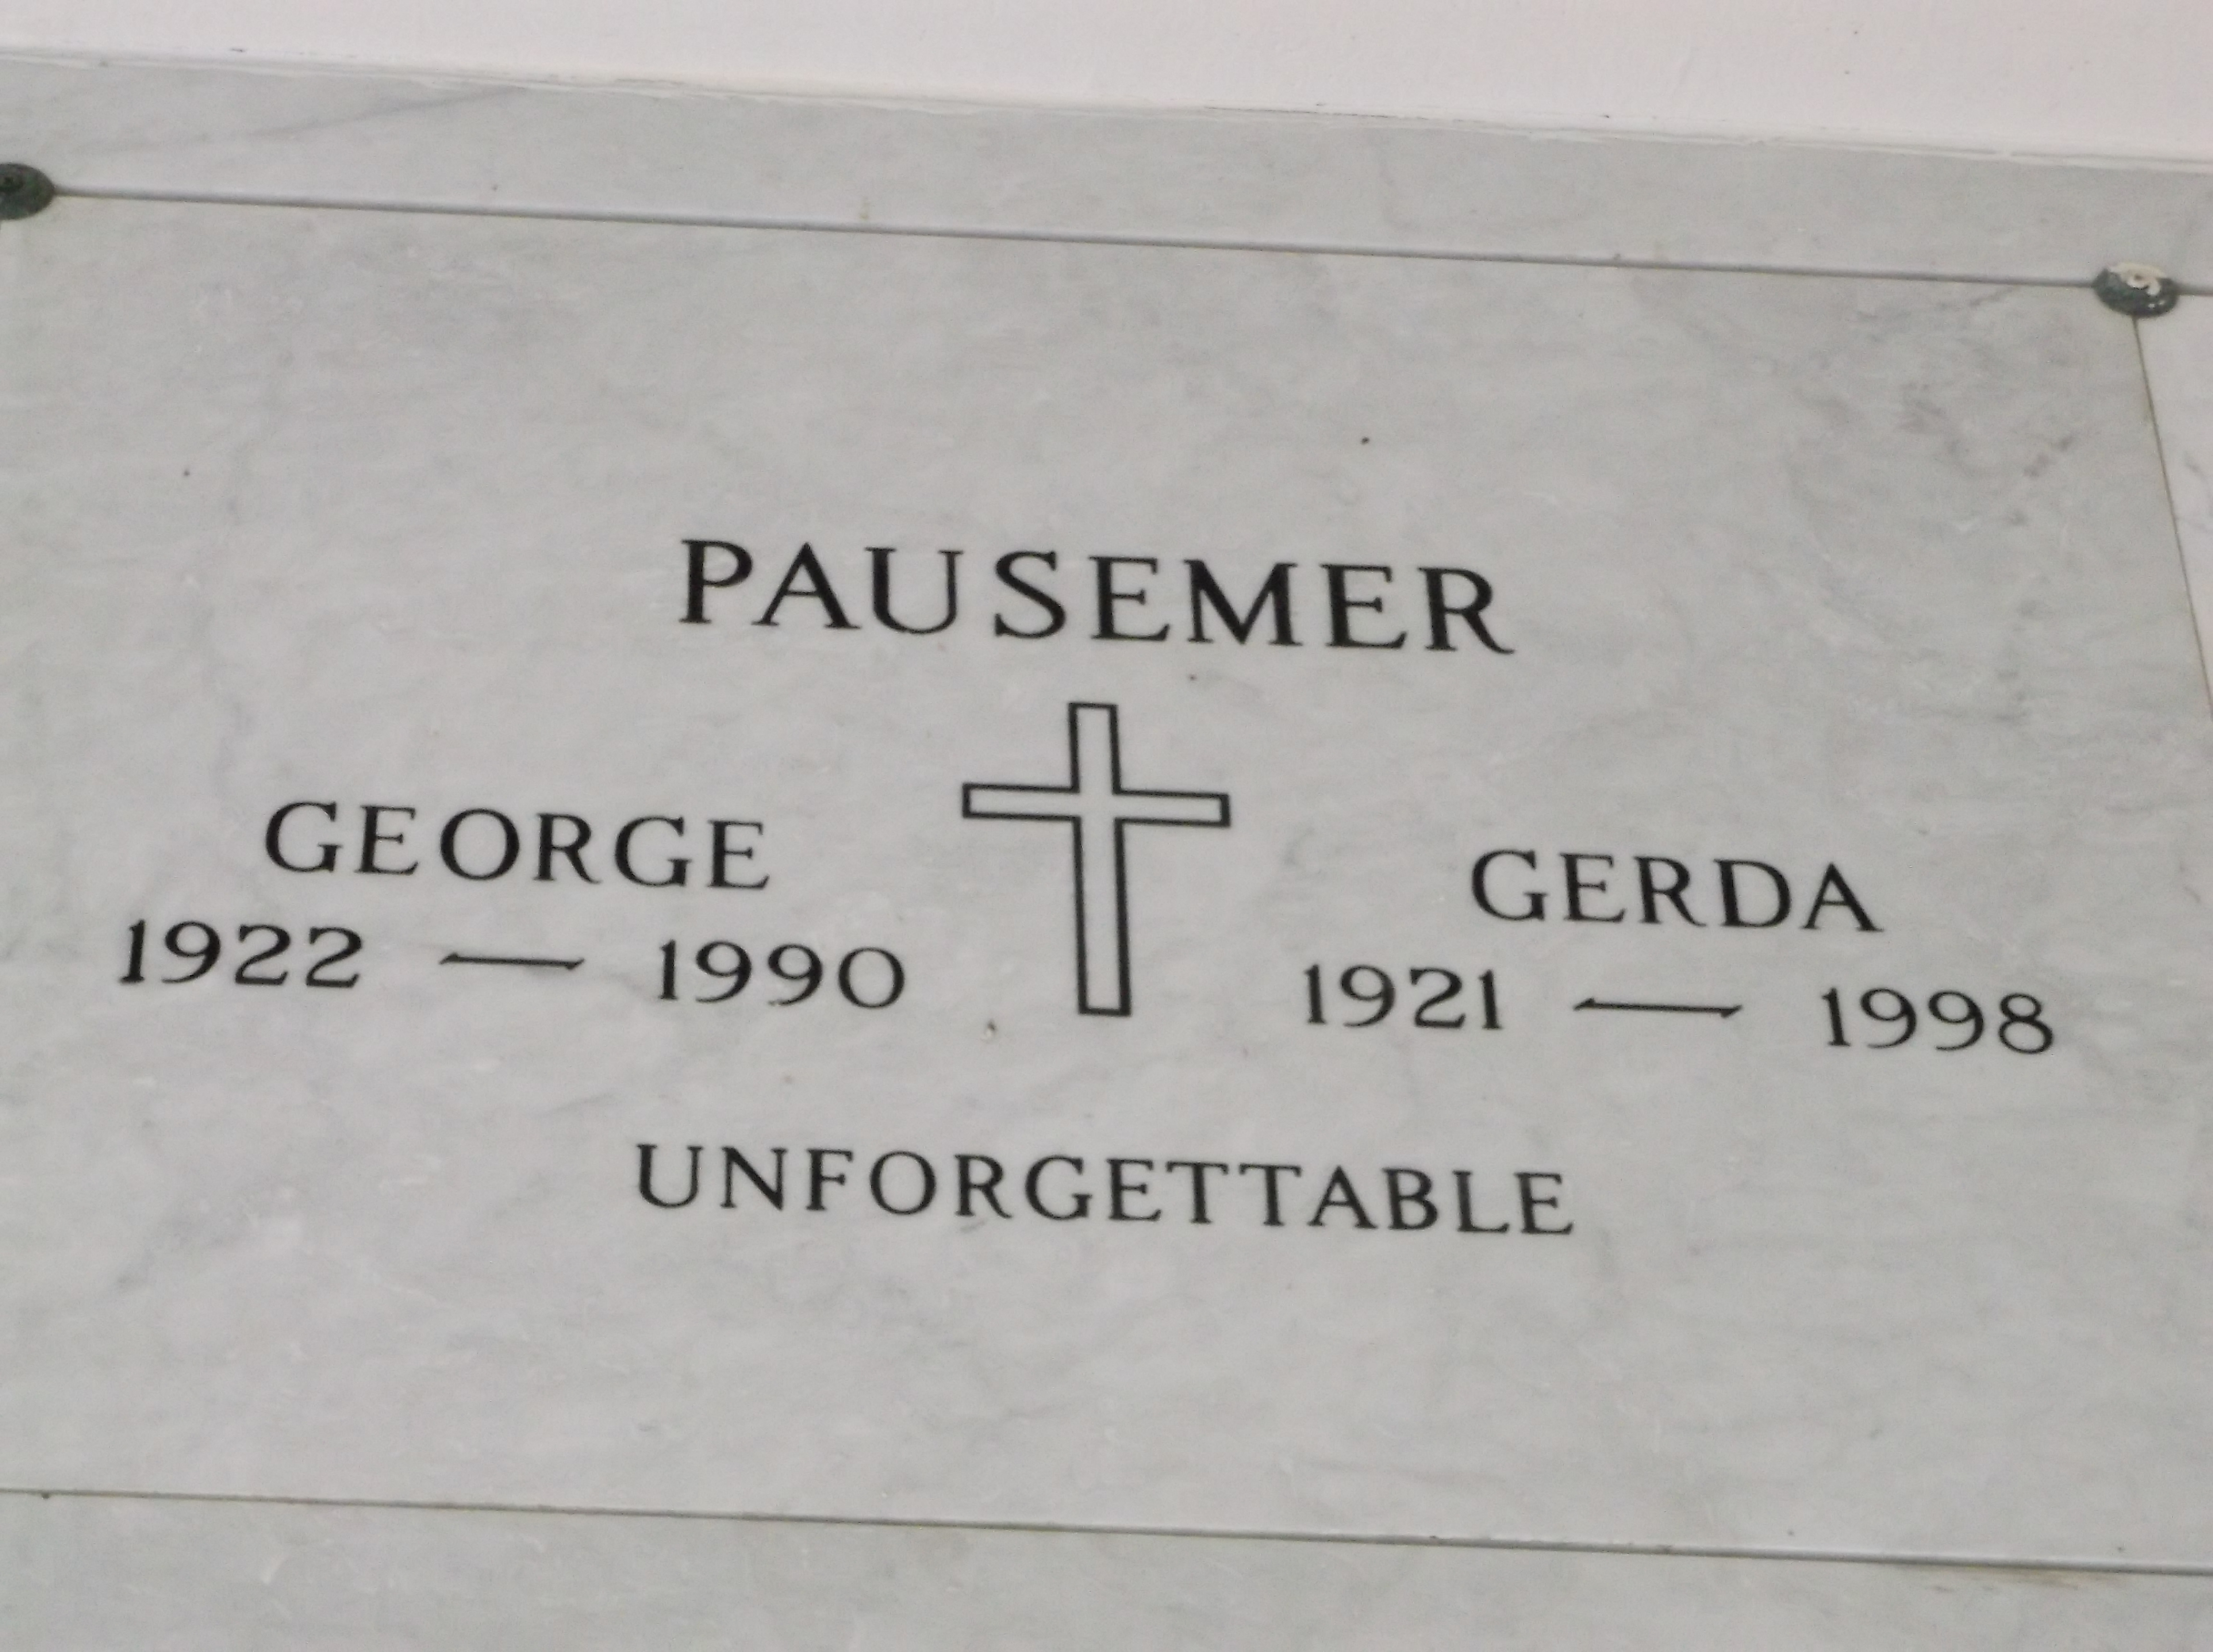 George Pausemer